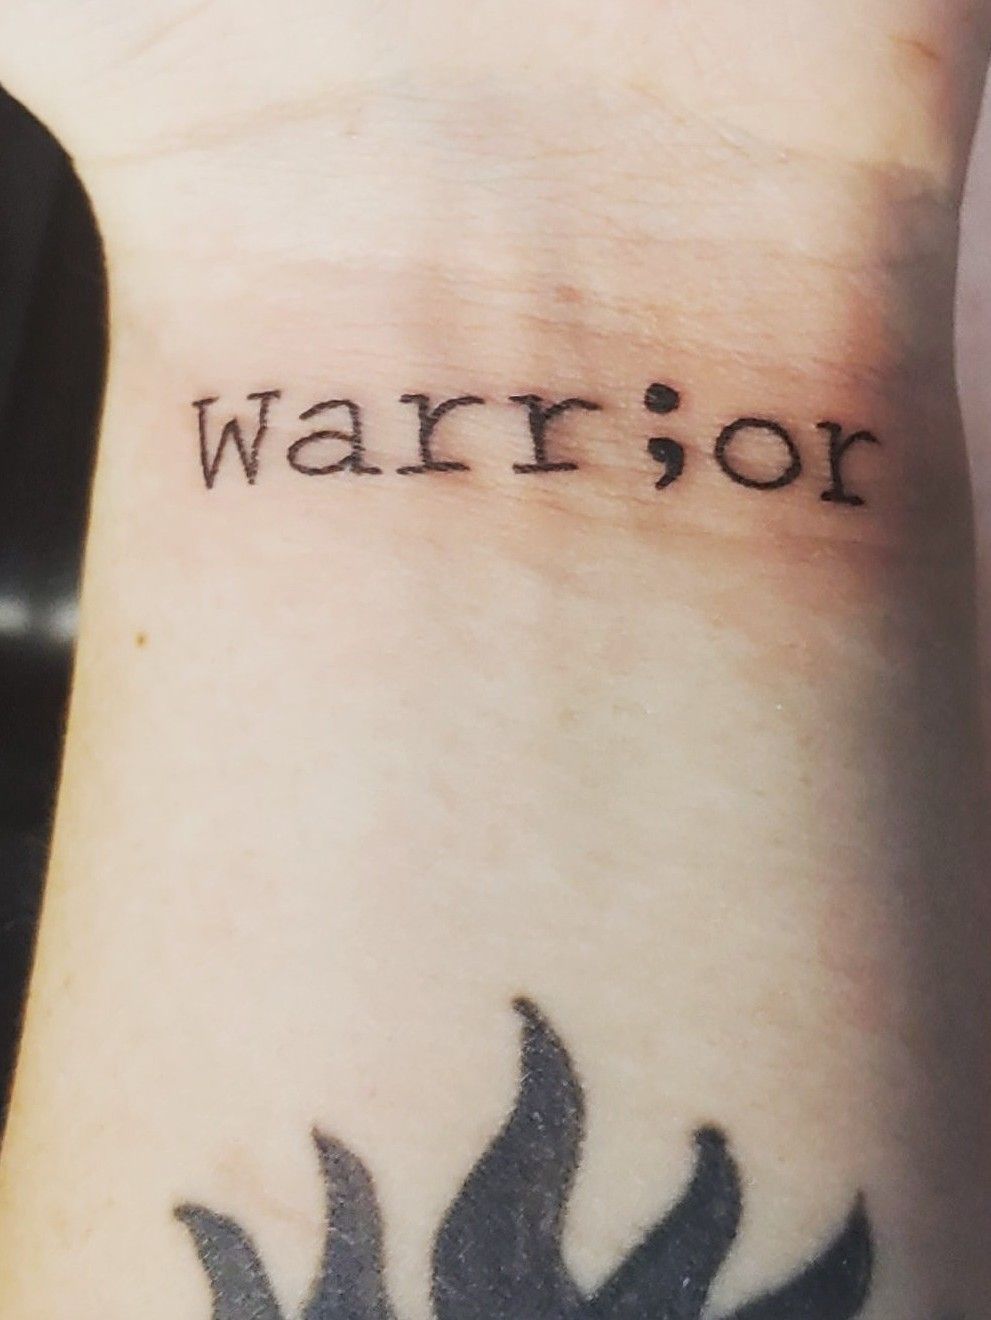 Share 76+ warrior tattoo with semicolon - in.eteachers